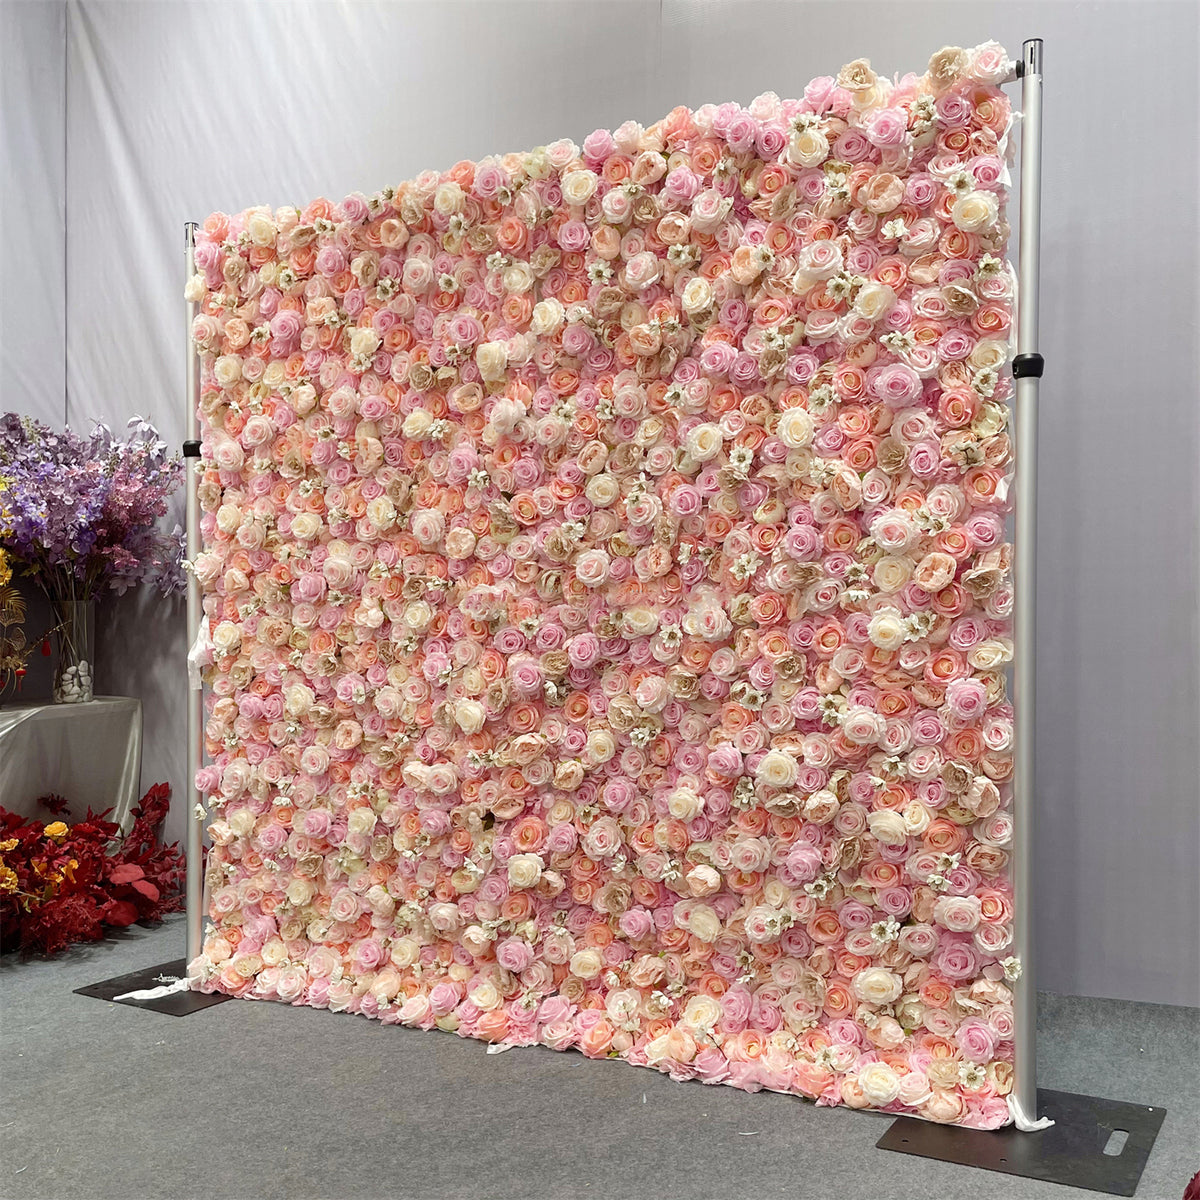 3D Artificial Flower Wall Arrangement Wedding Party Birthday Backdrop Decor HQ3895